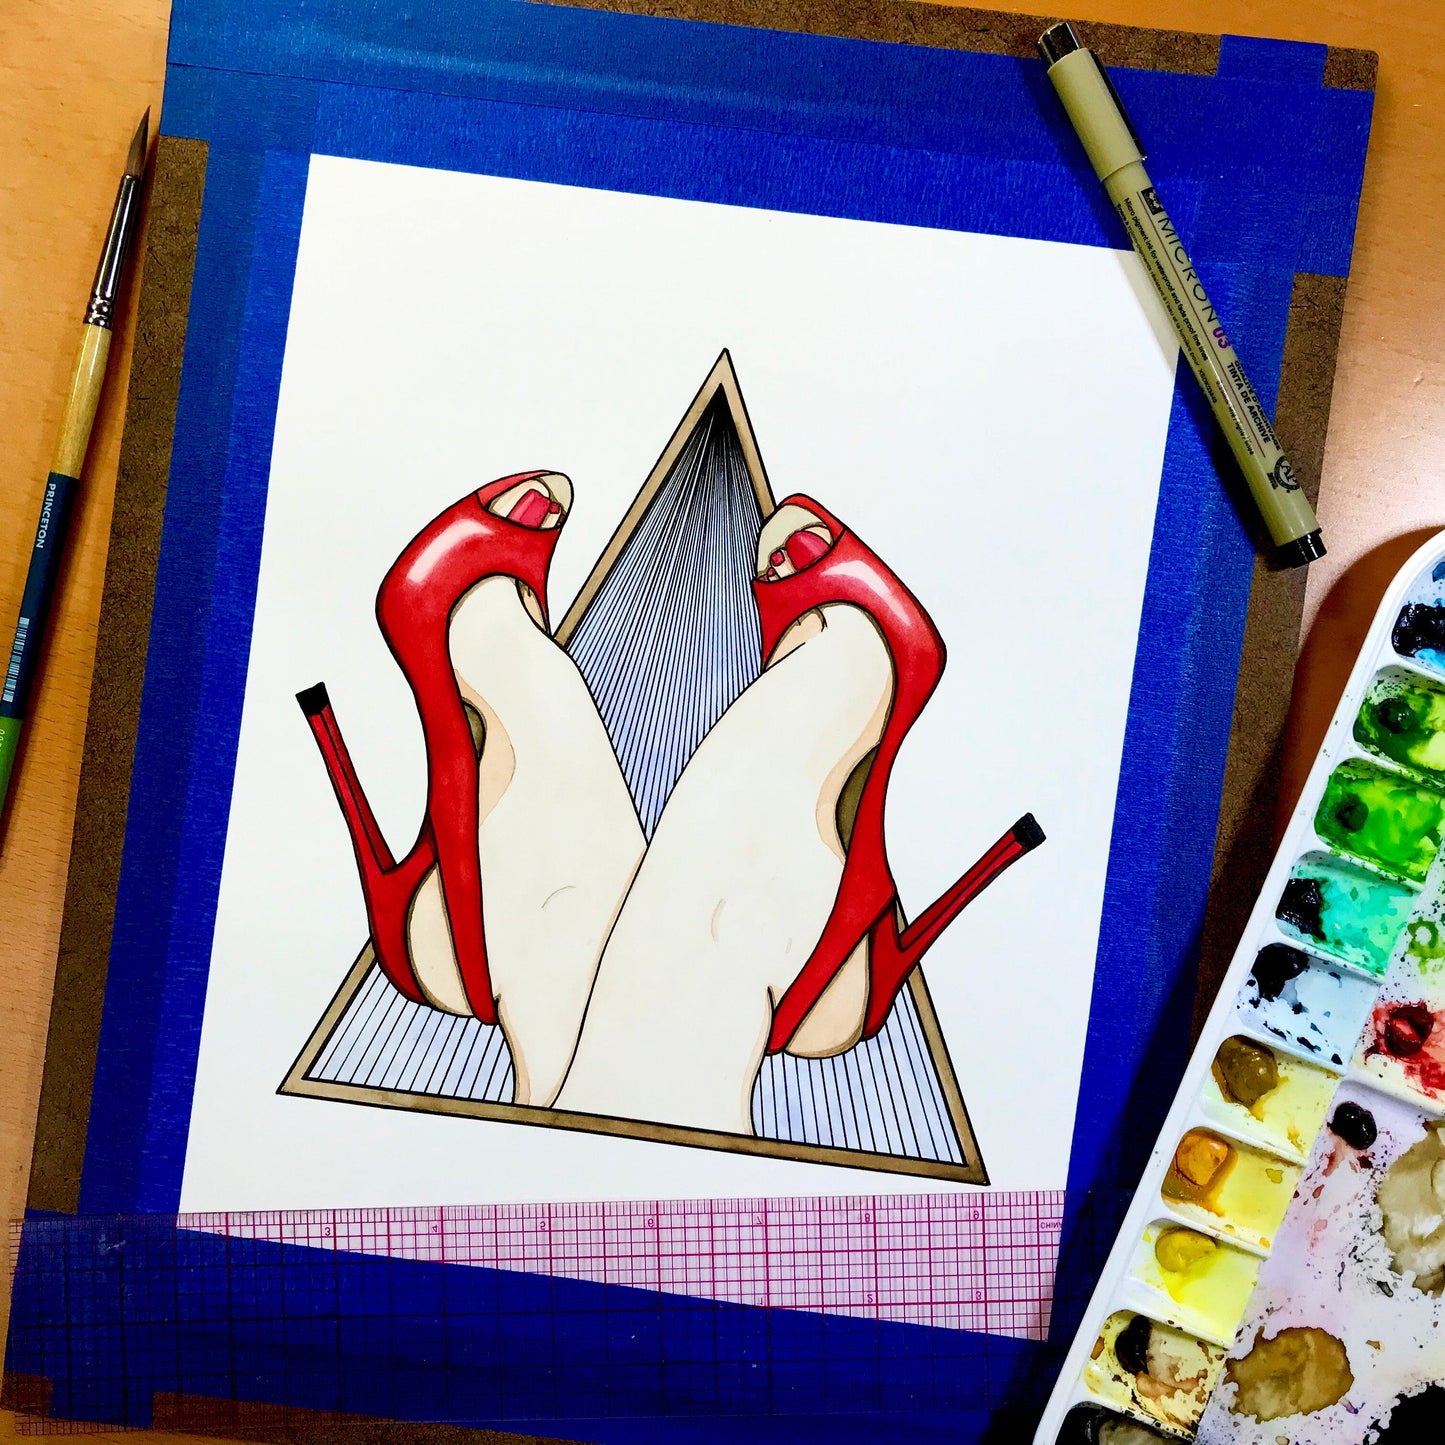 PinkPolish Design Original Art "Kick Up Your Heels" High Heel Inspired Original Watercolor & Ink Illustration